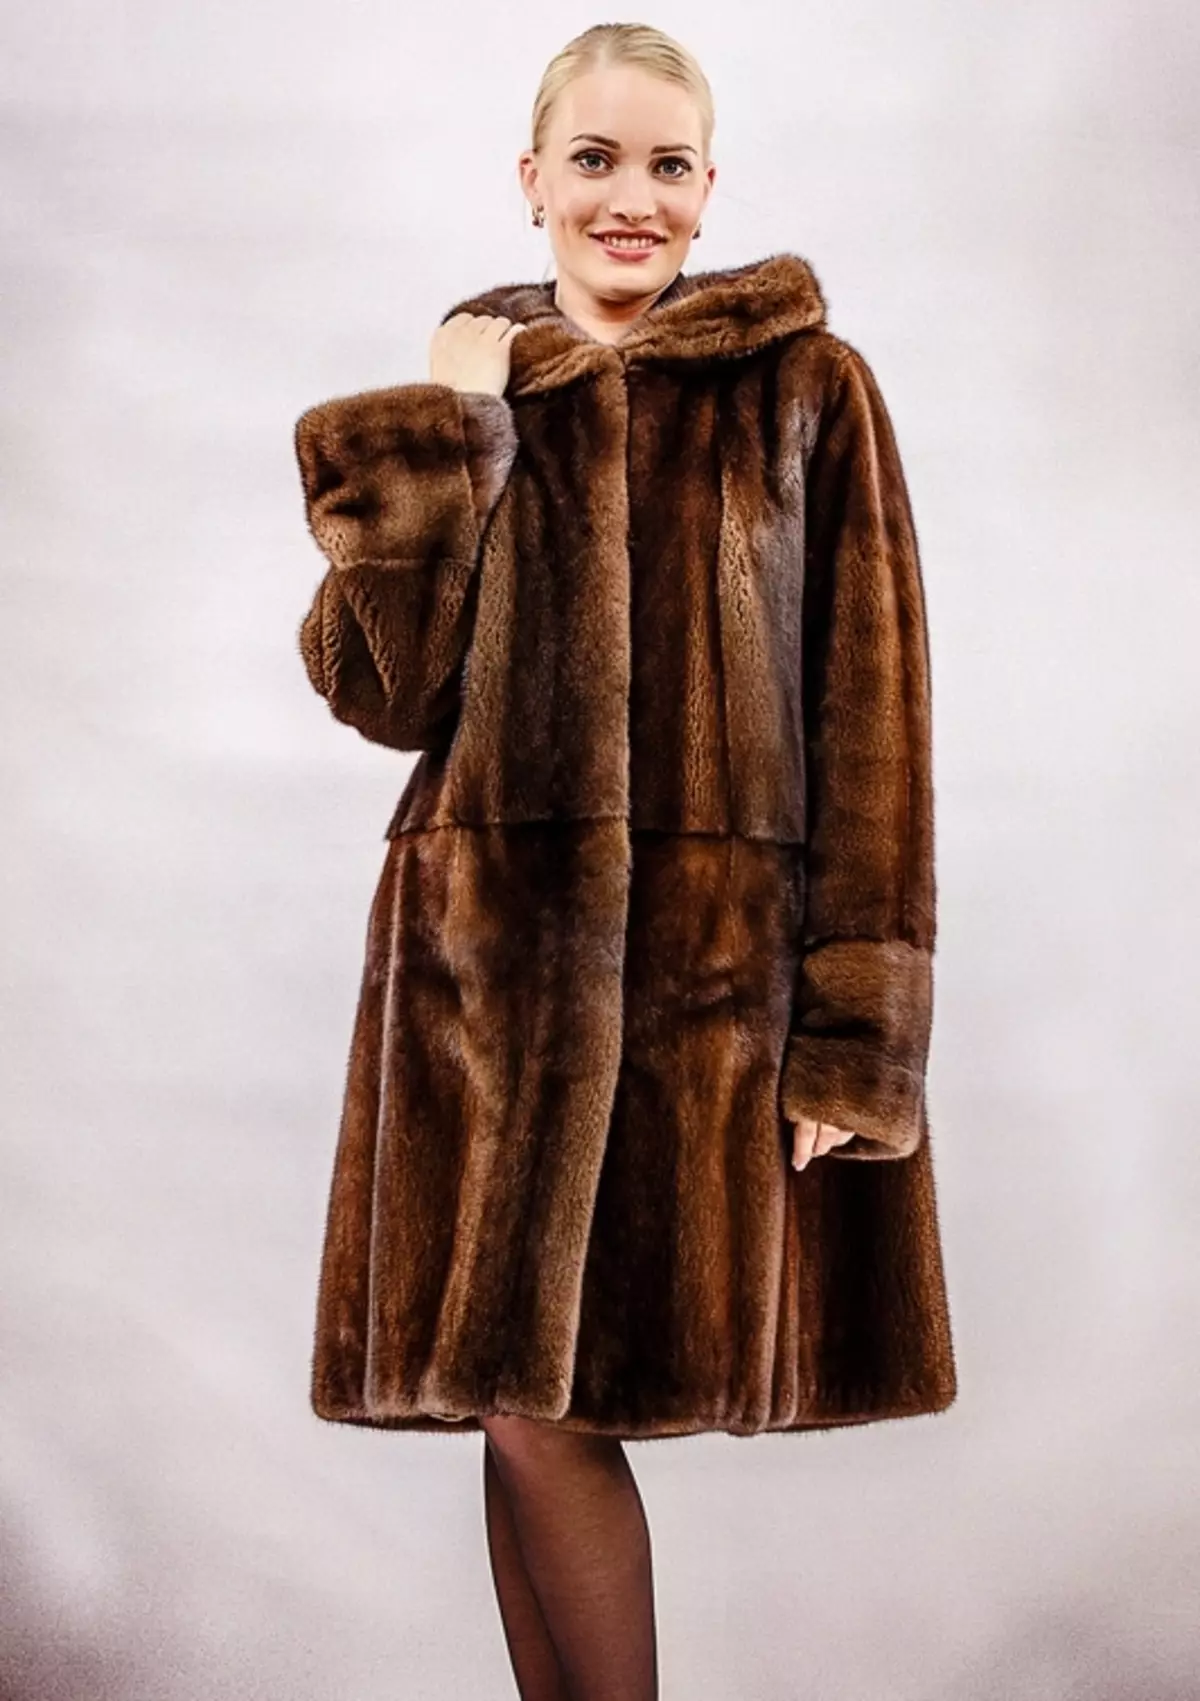 Mermeriny Fur Coats (37 foto): Recensione di modelli eleganti del marchio 325_17